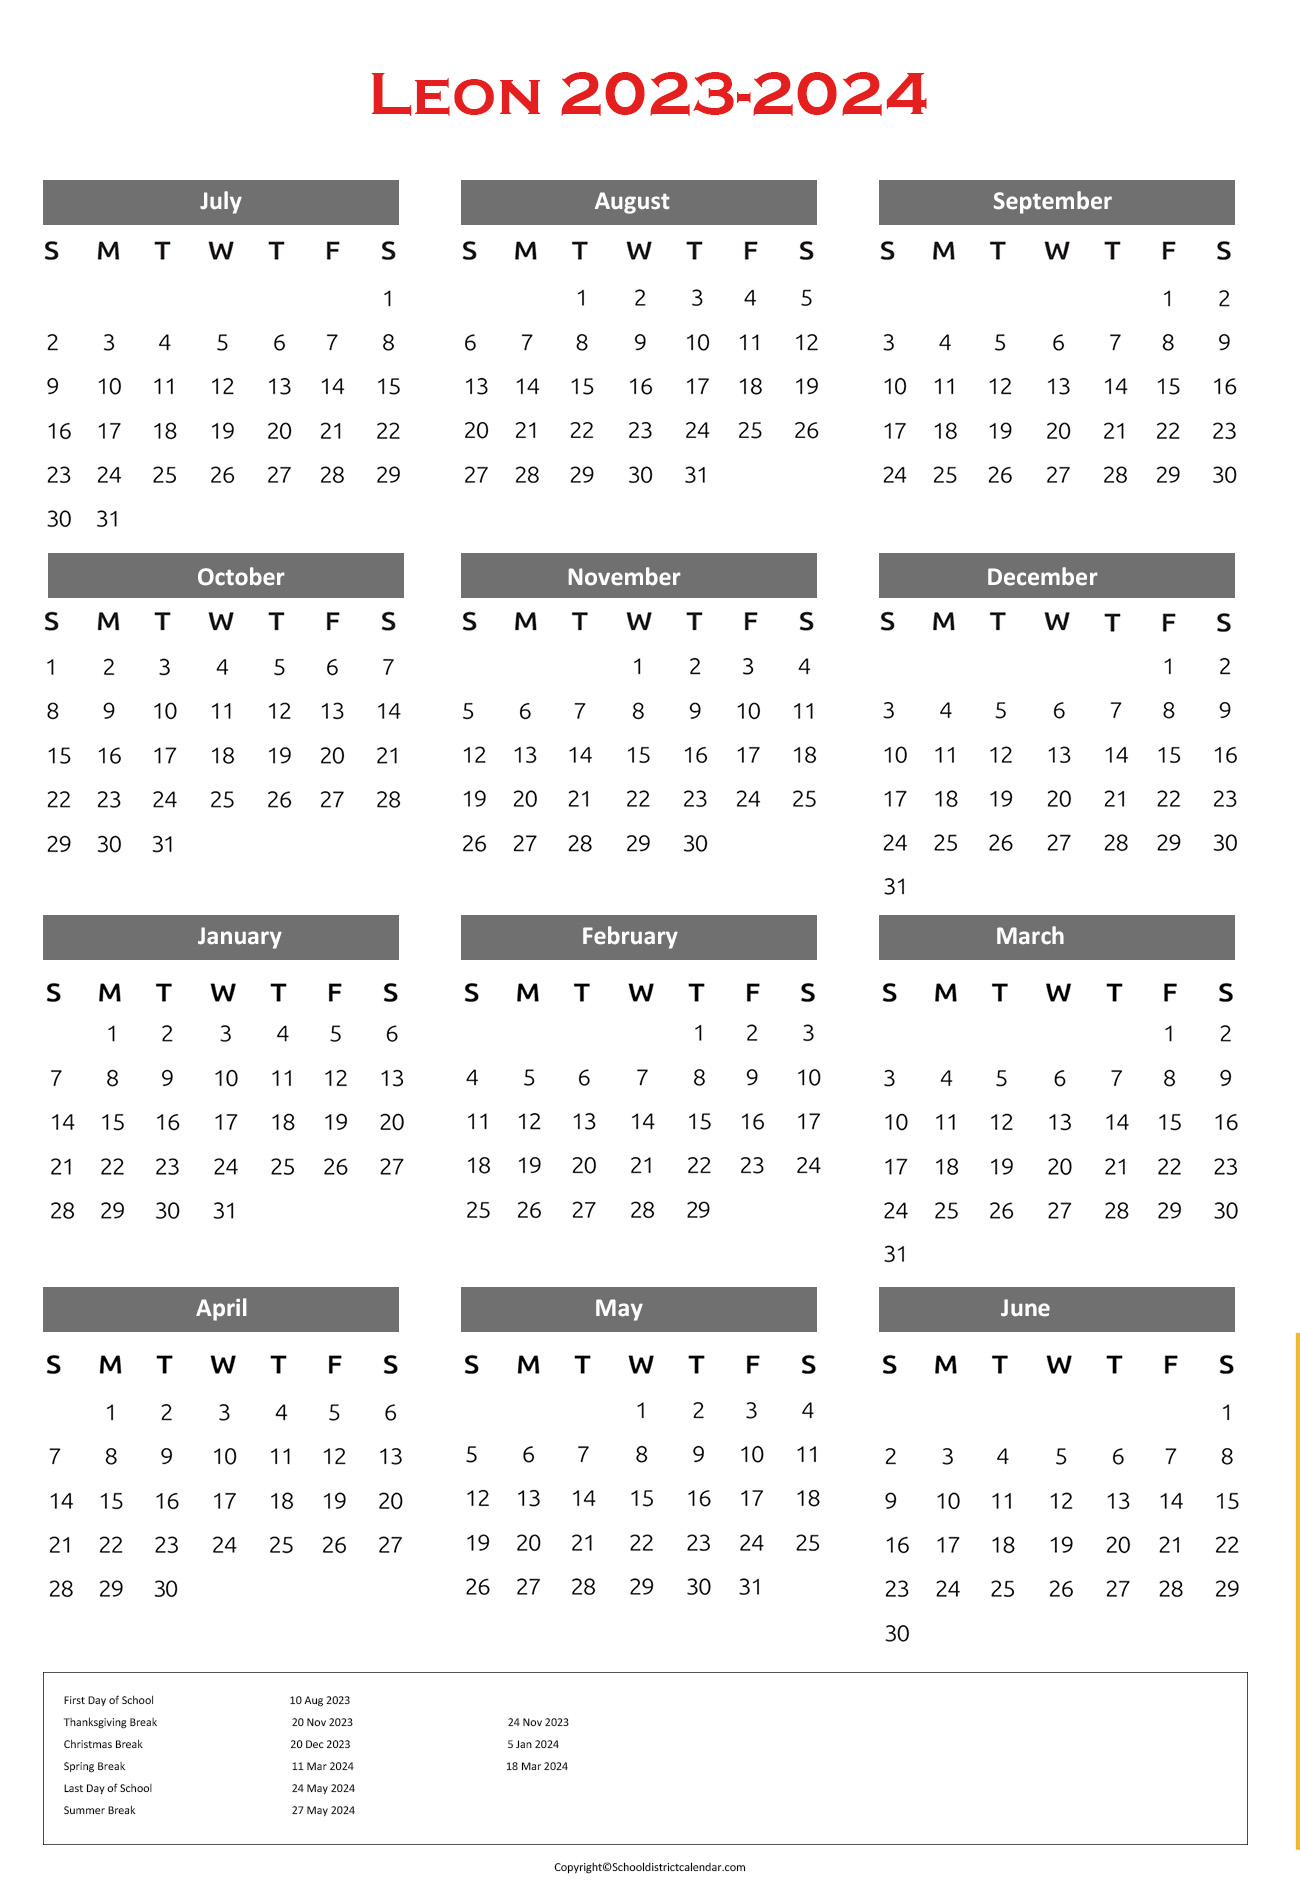 Leon County Schools Calendar Holidays 2023 2024